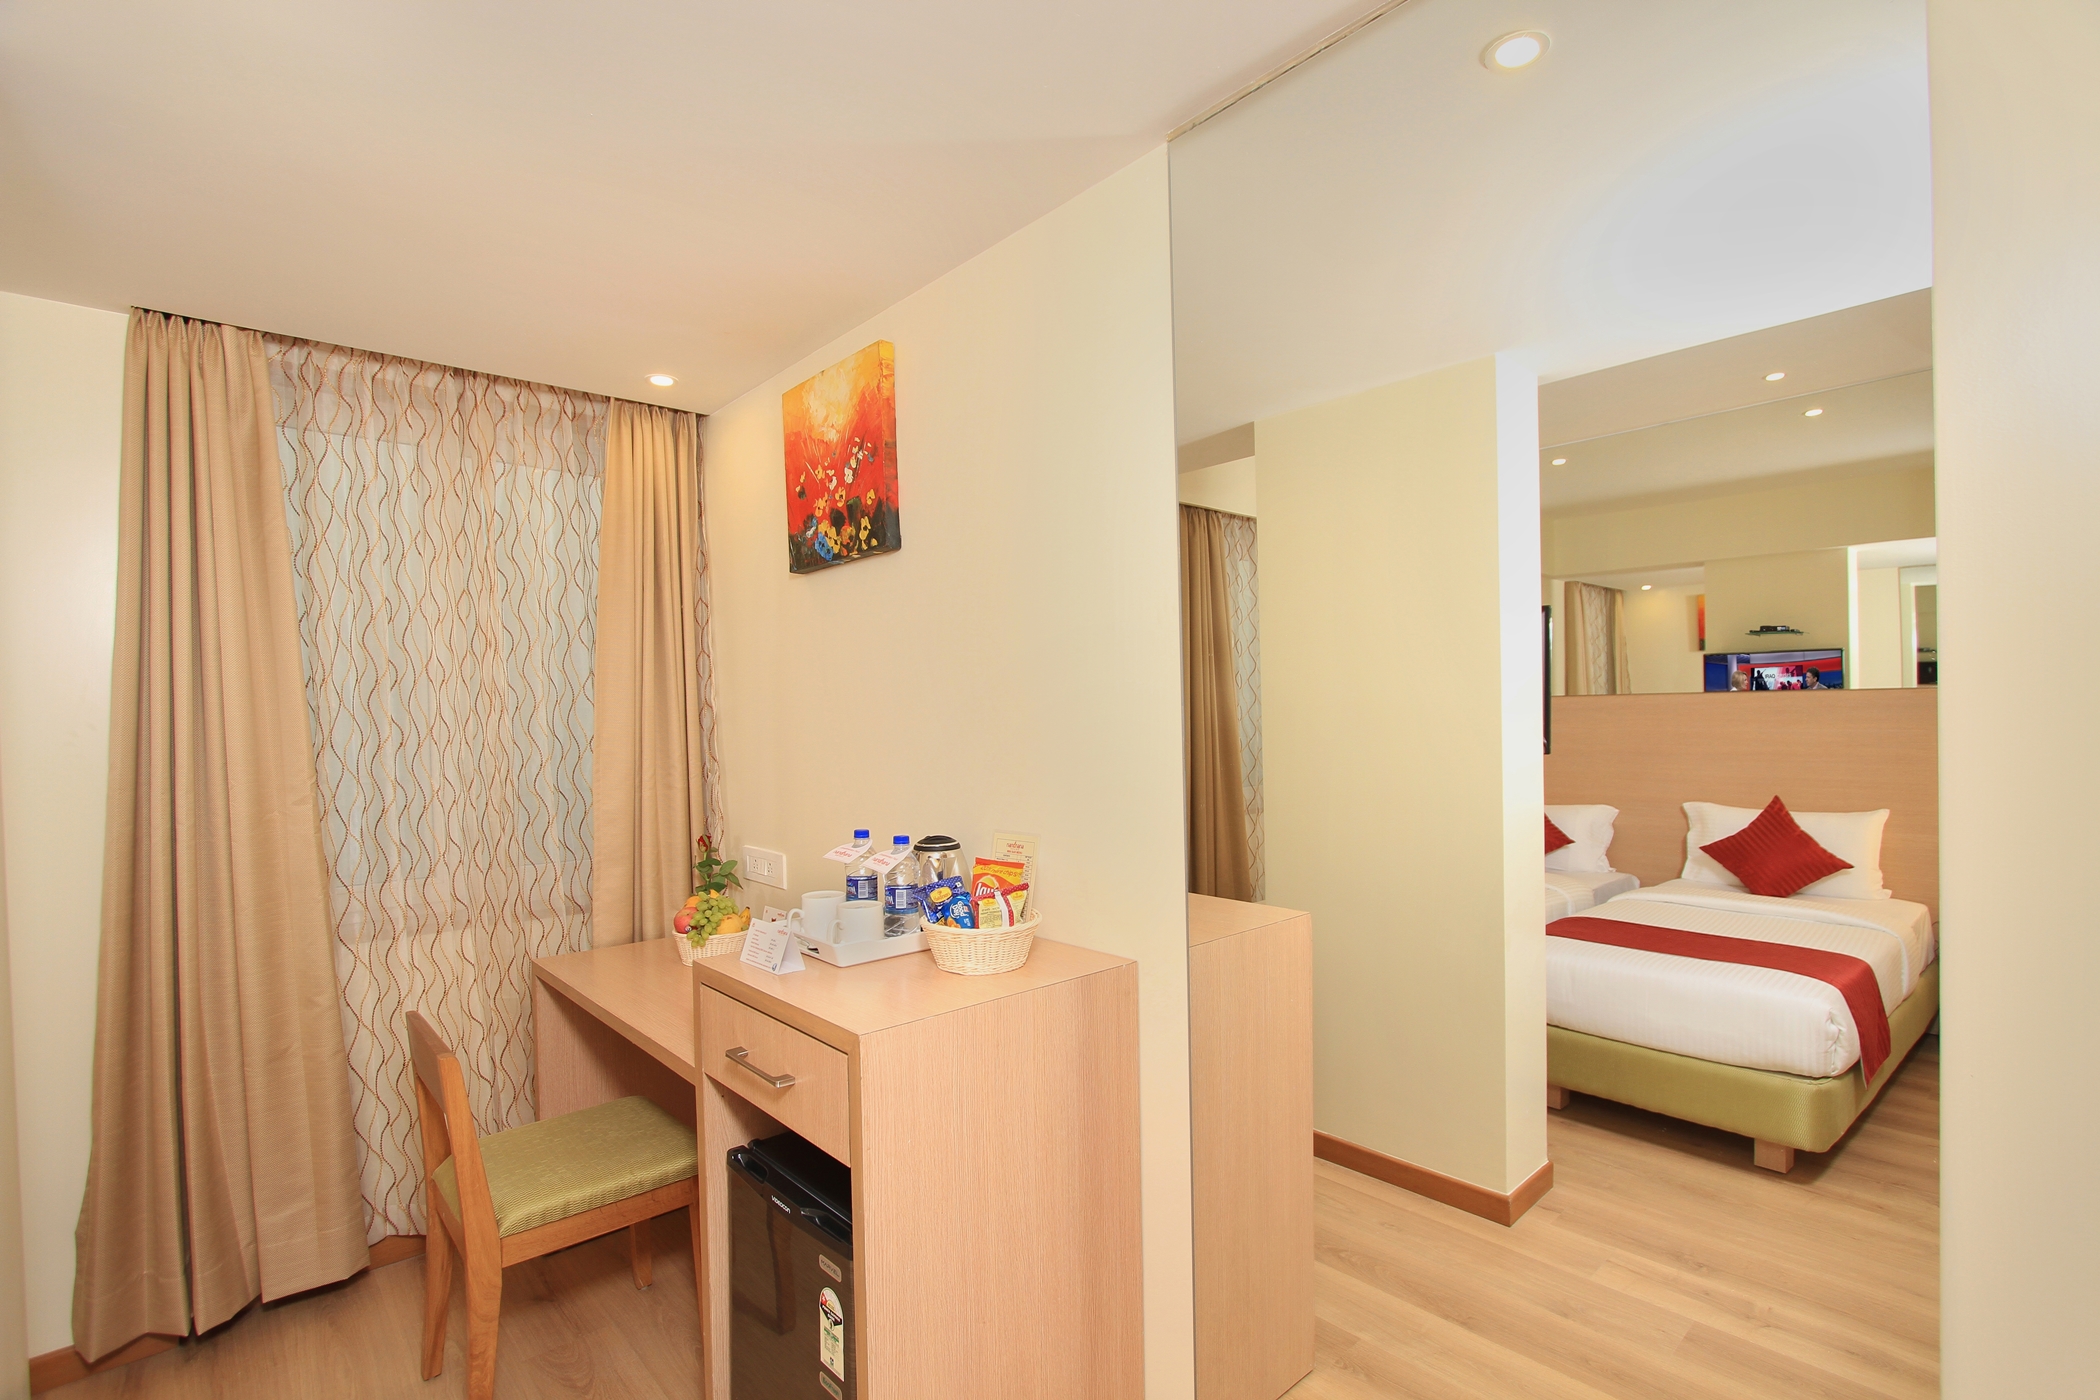 DELUXE TWIN ROOM 1, rooms in koramangala, La Sara Regent Hotel, Koramangala,  2  3 1